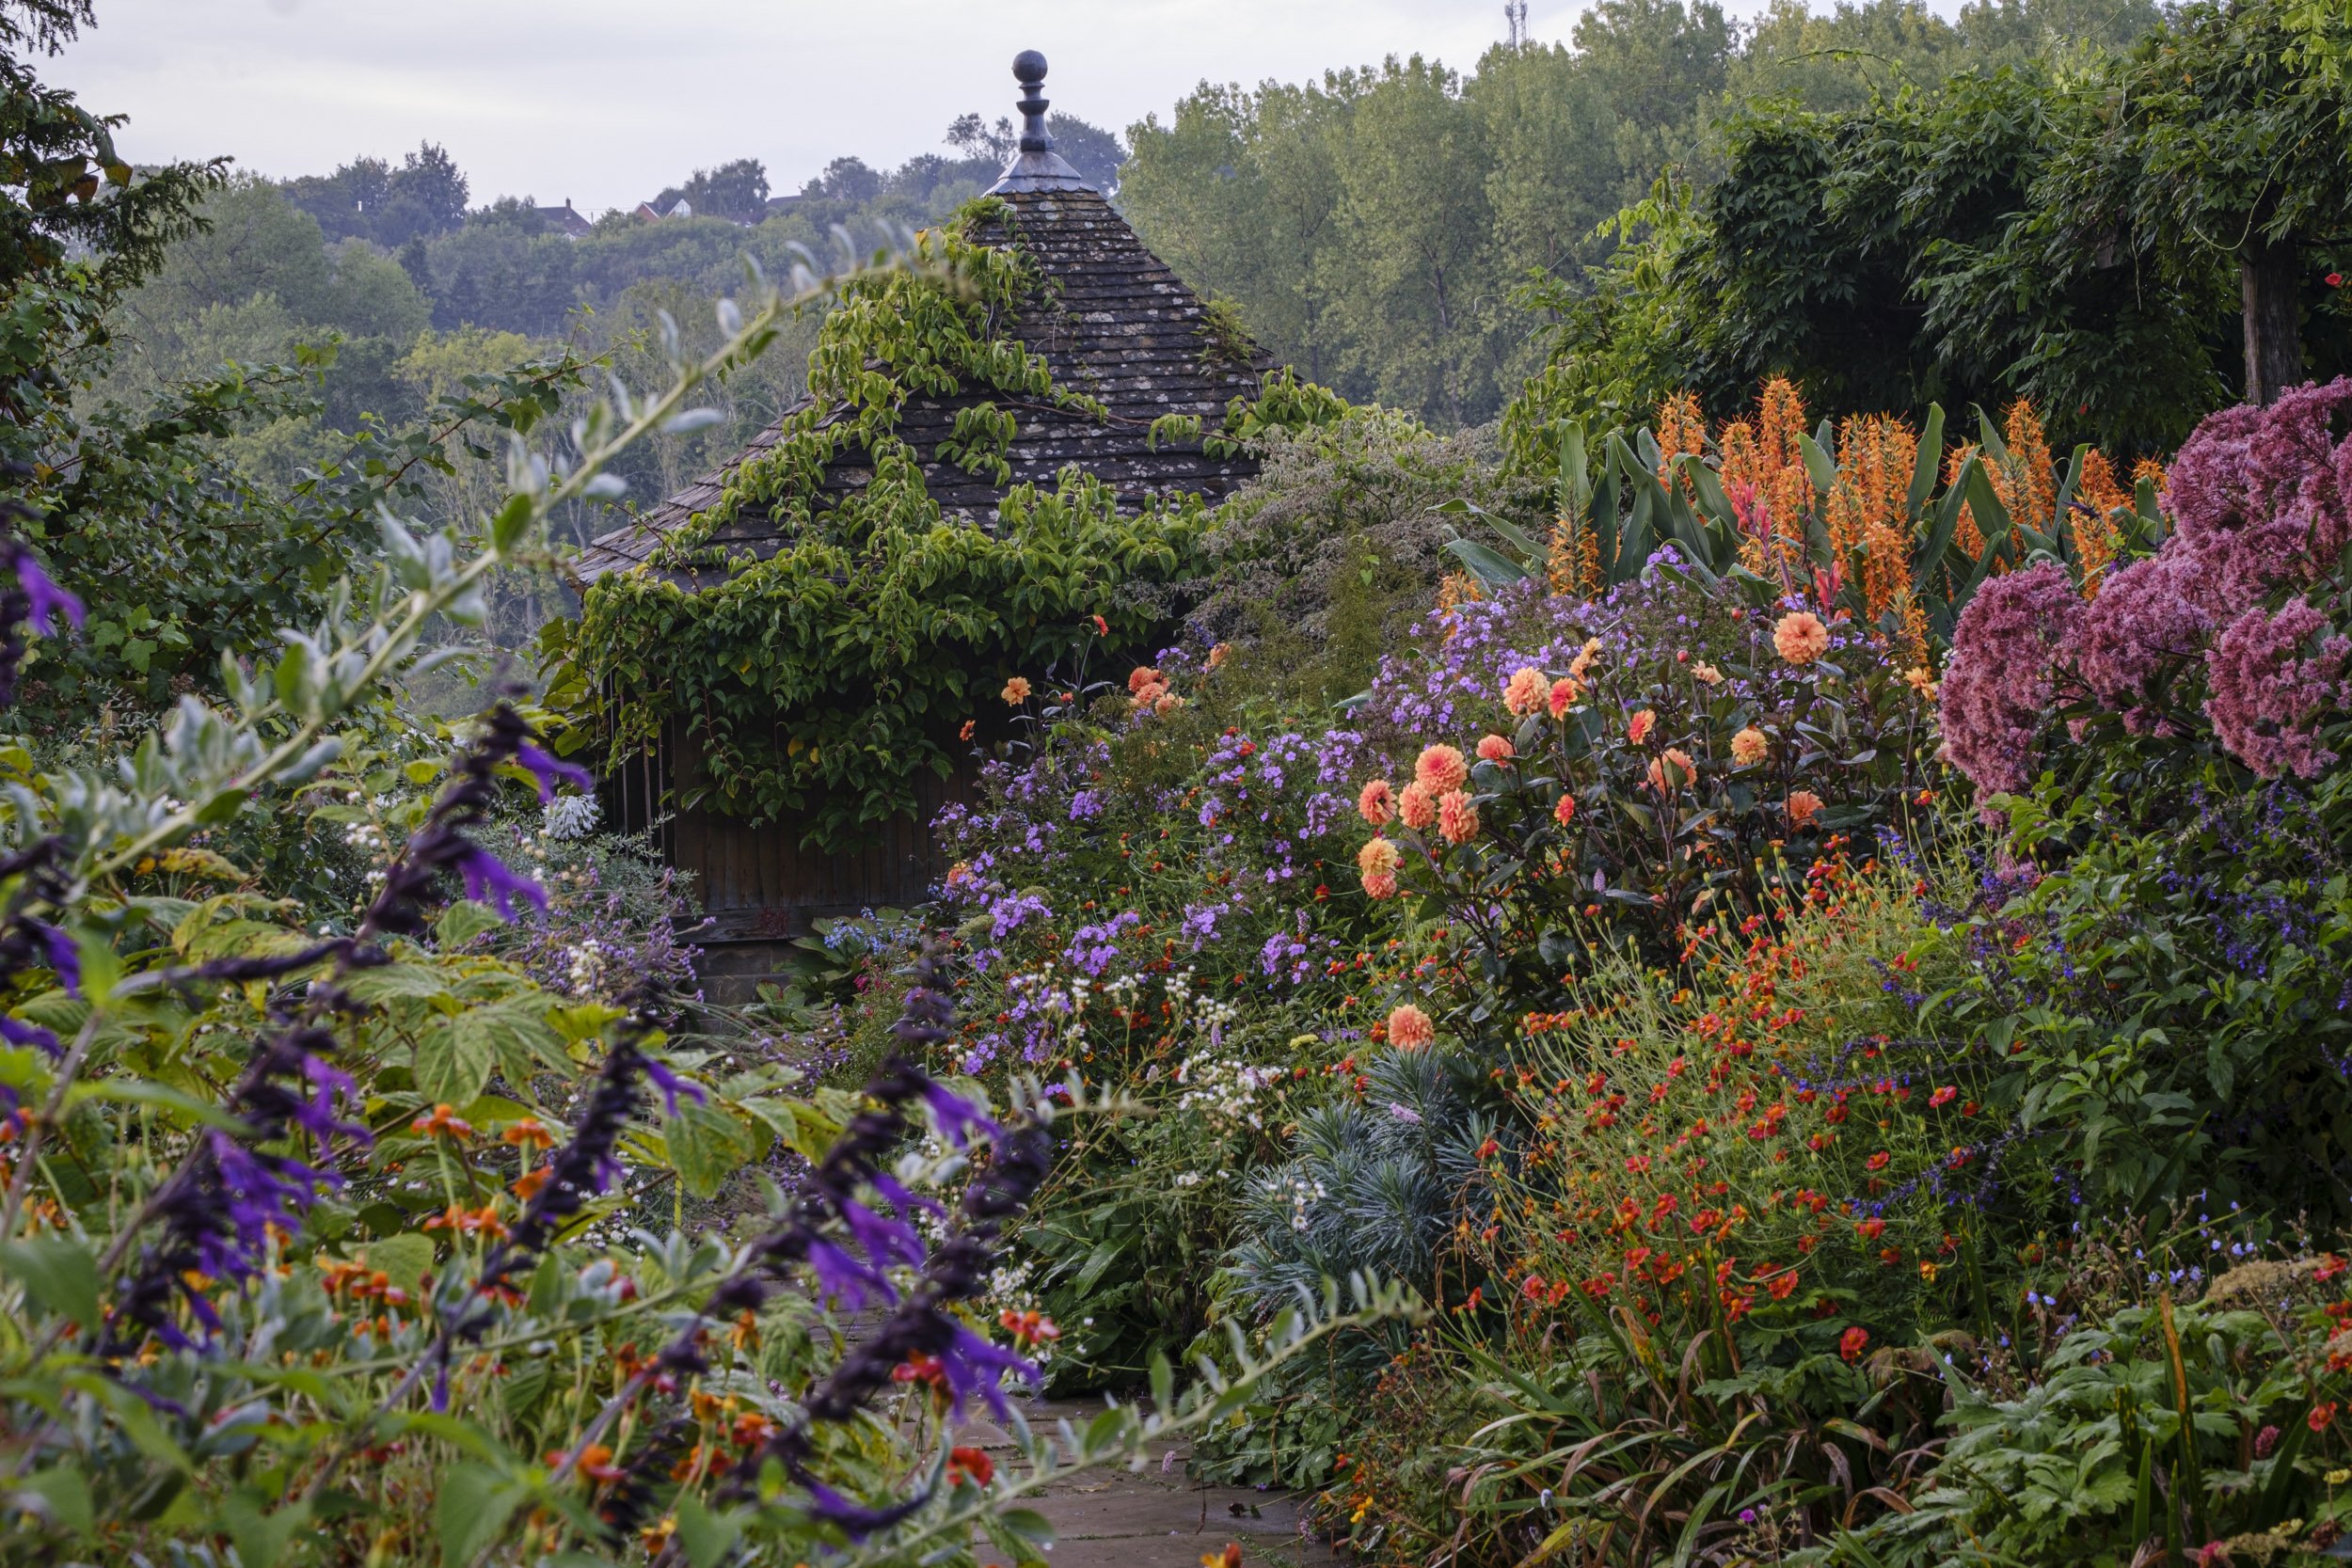 Gravetye Manor garden photography in autumn